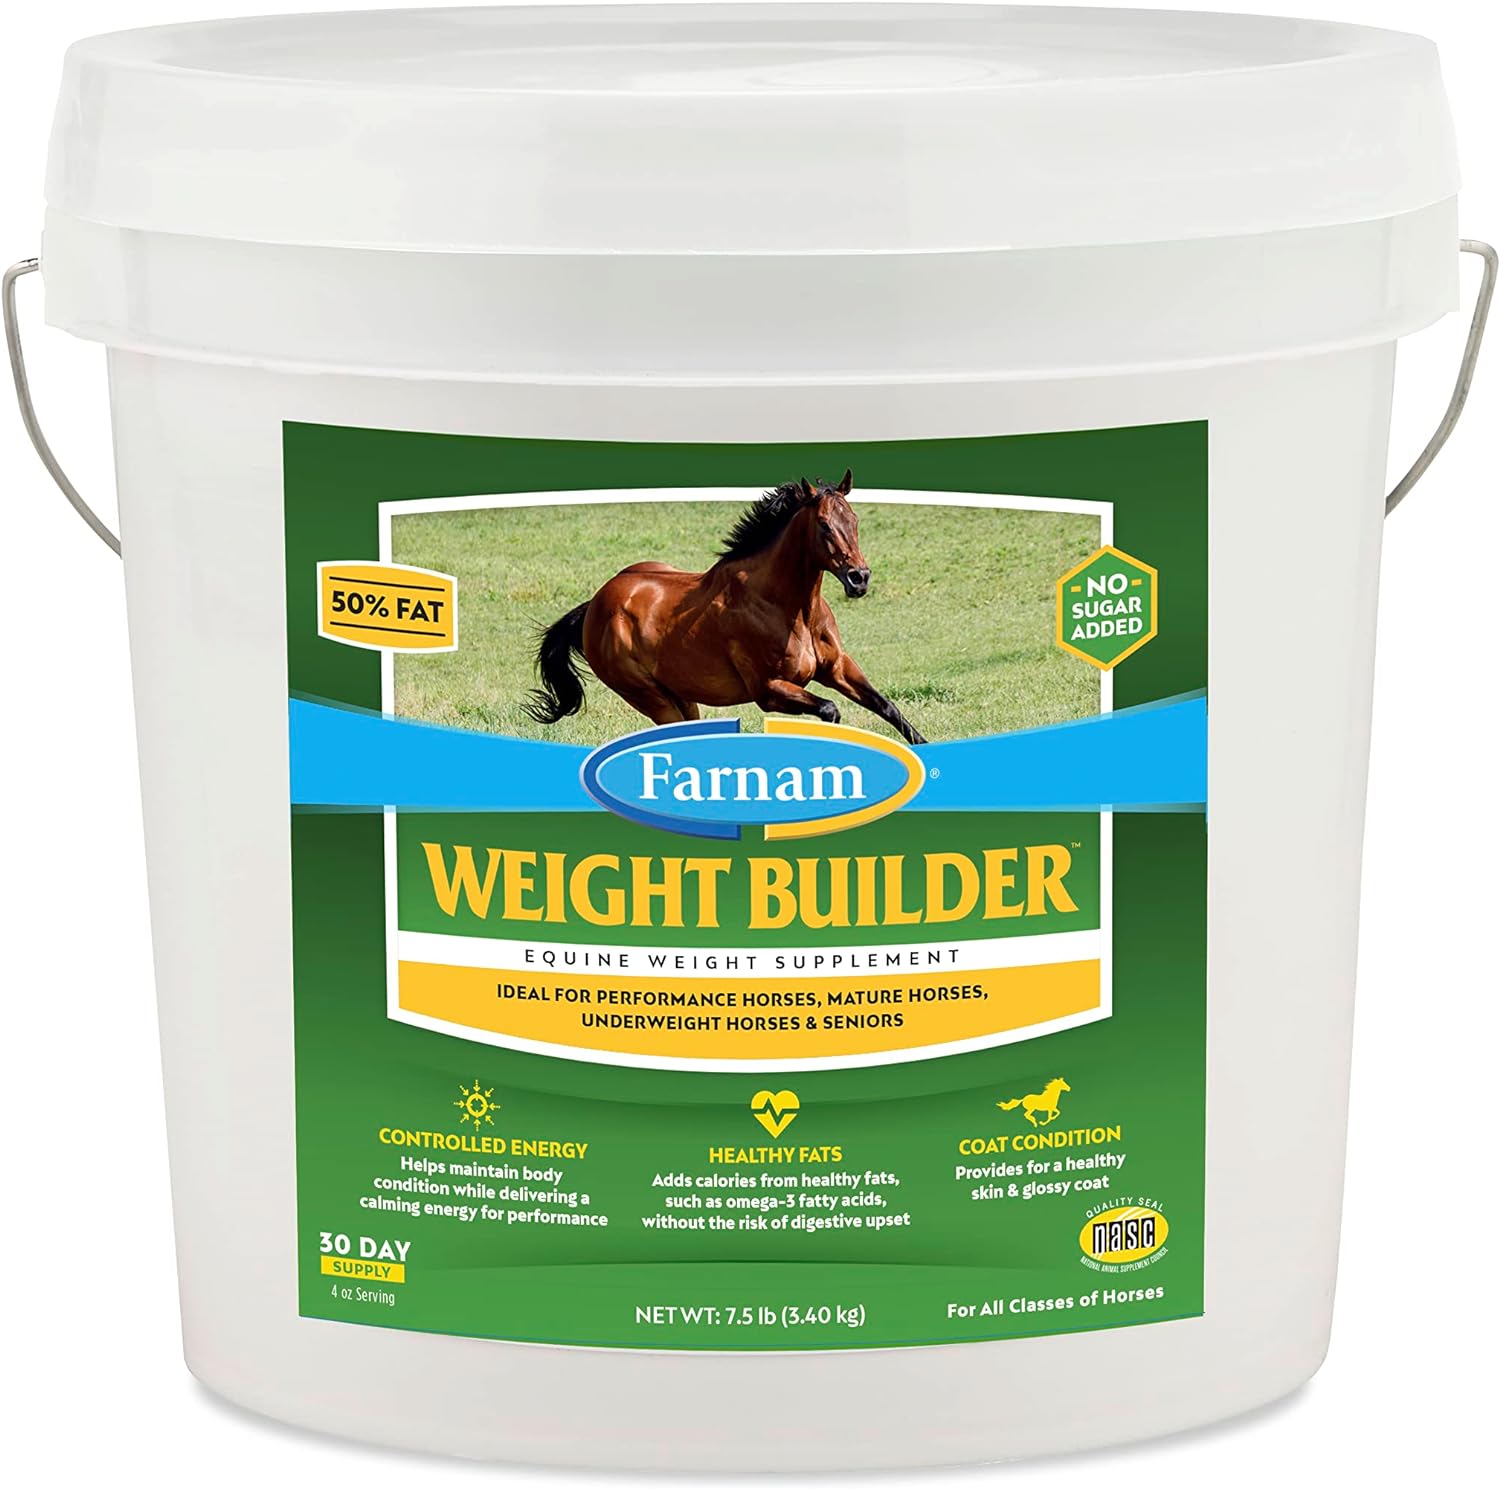 Farnam Weight Builder Horse Weight Supplement, Helps Ma